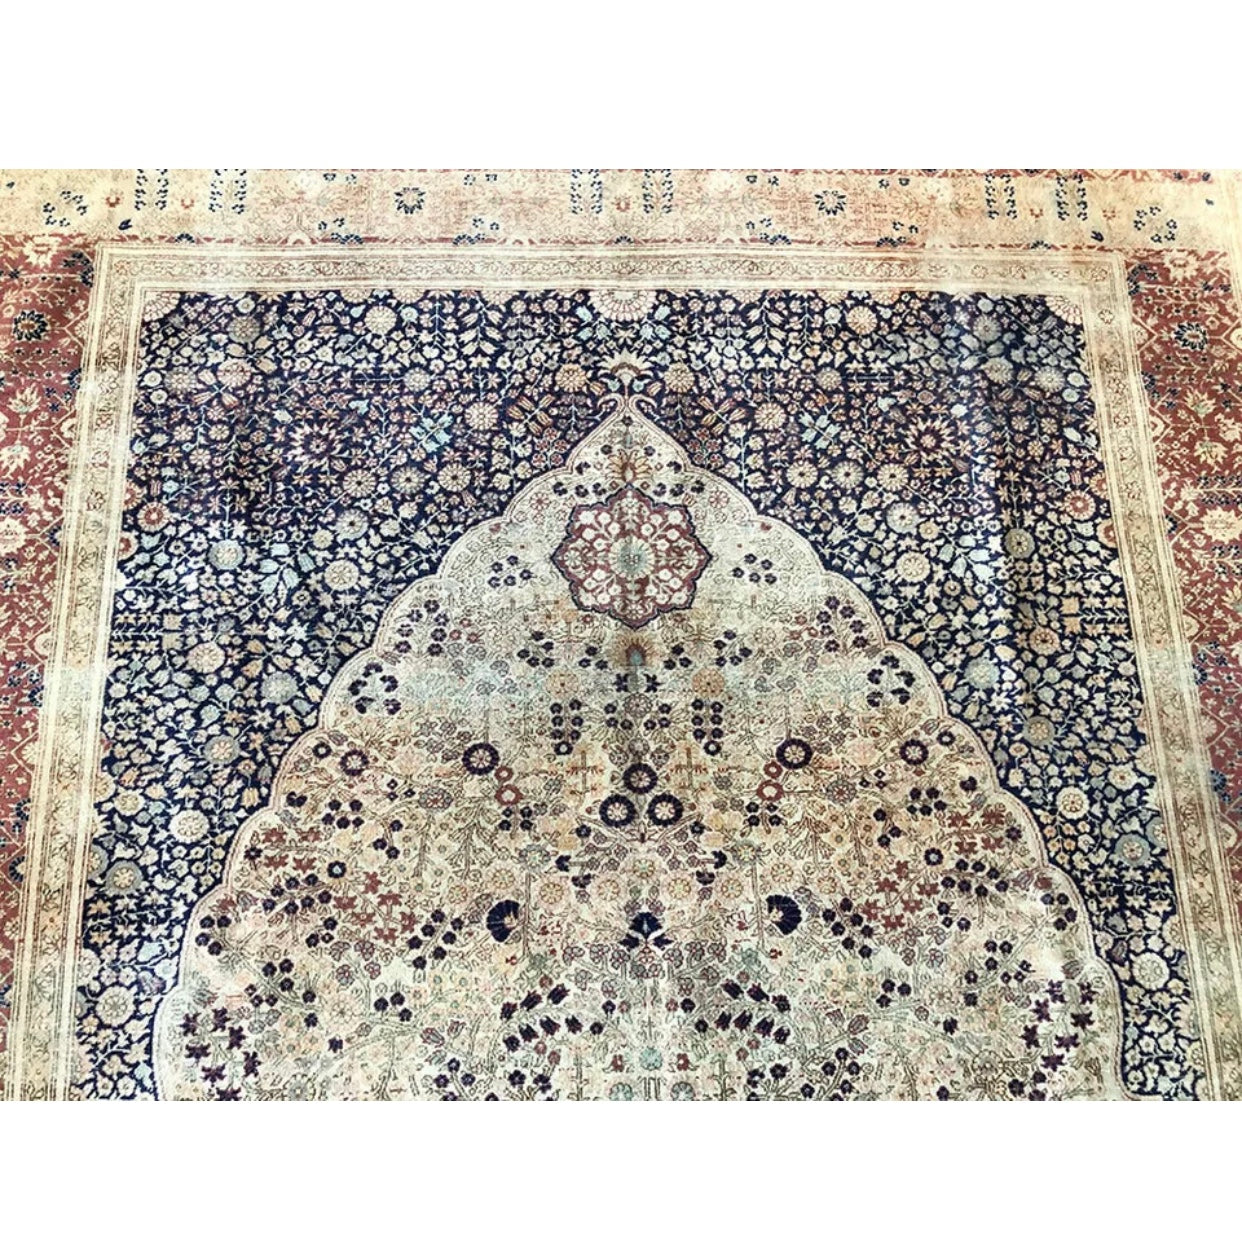 Antique Unusual Directional 7’x10’ Persian Tabriz Rug Haji Halili Style